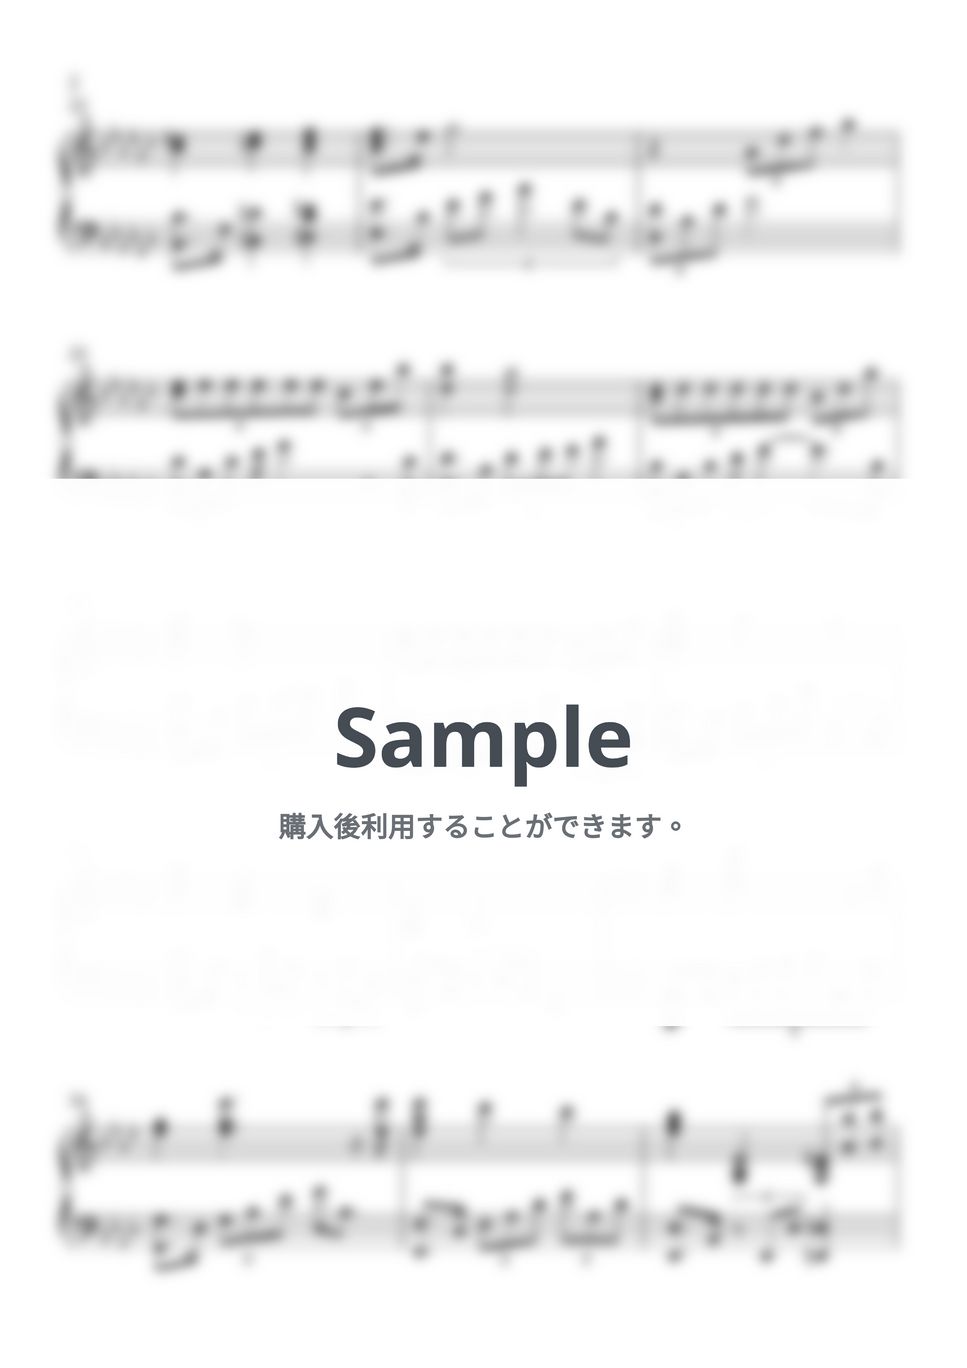 BoA - メリクリ (Merry-Chri) by カッパカッパ Piano